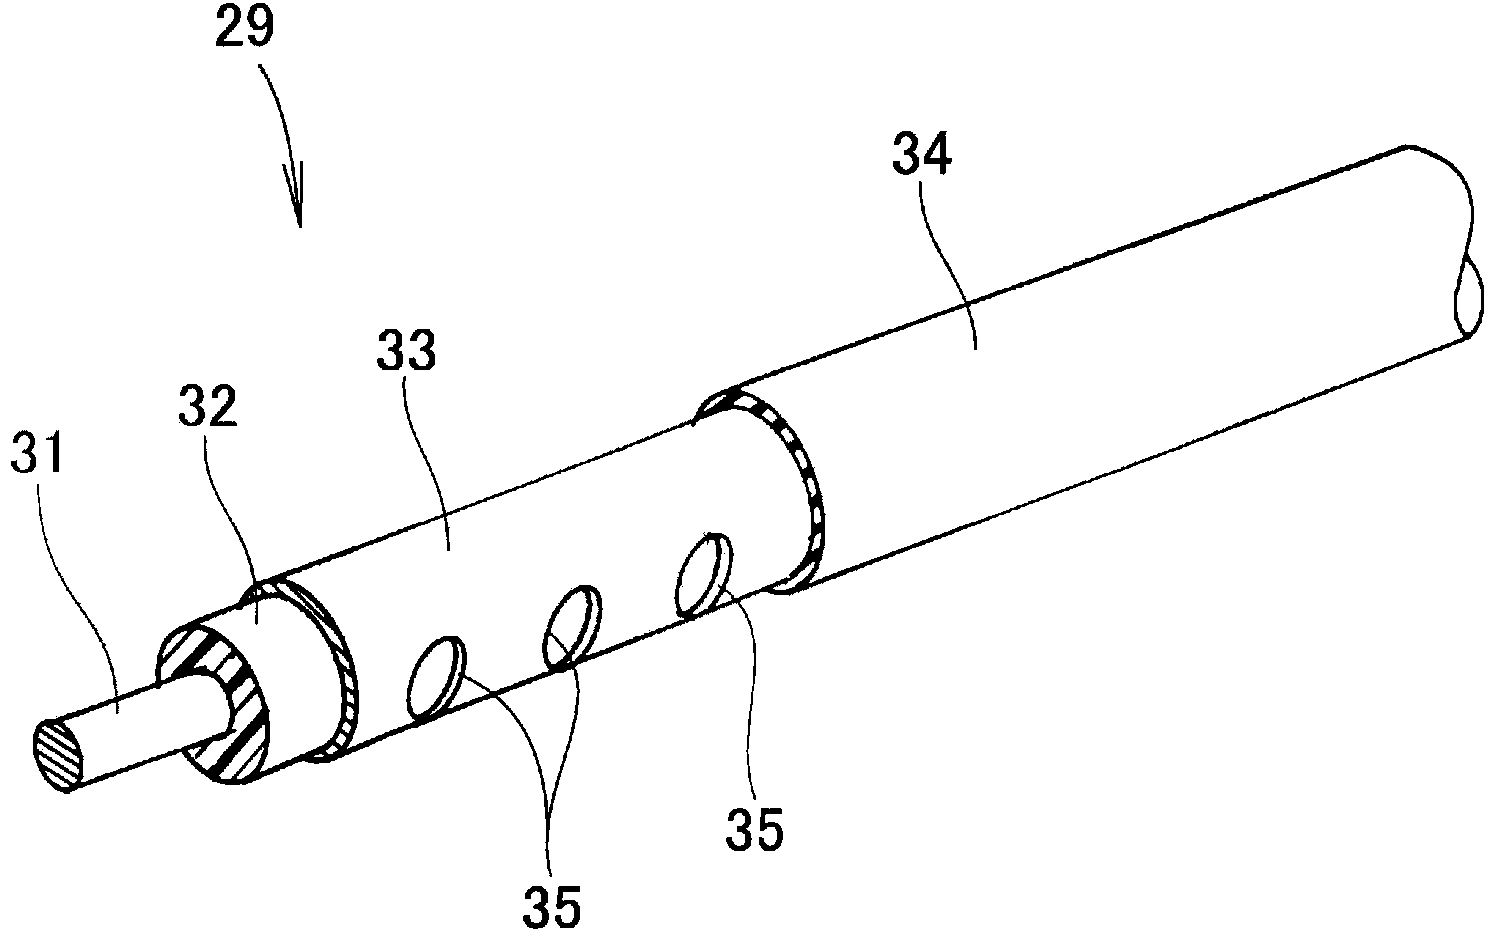 Antenna arrangement structure for vehicle communication apparatus